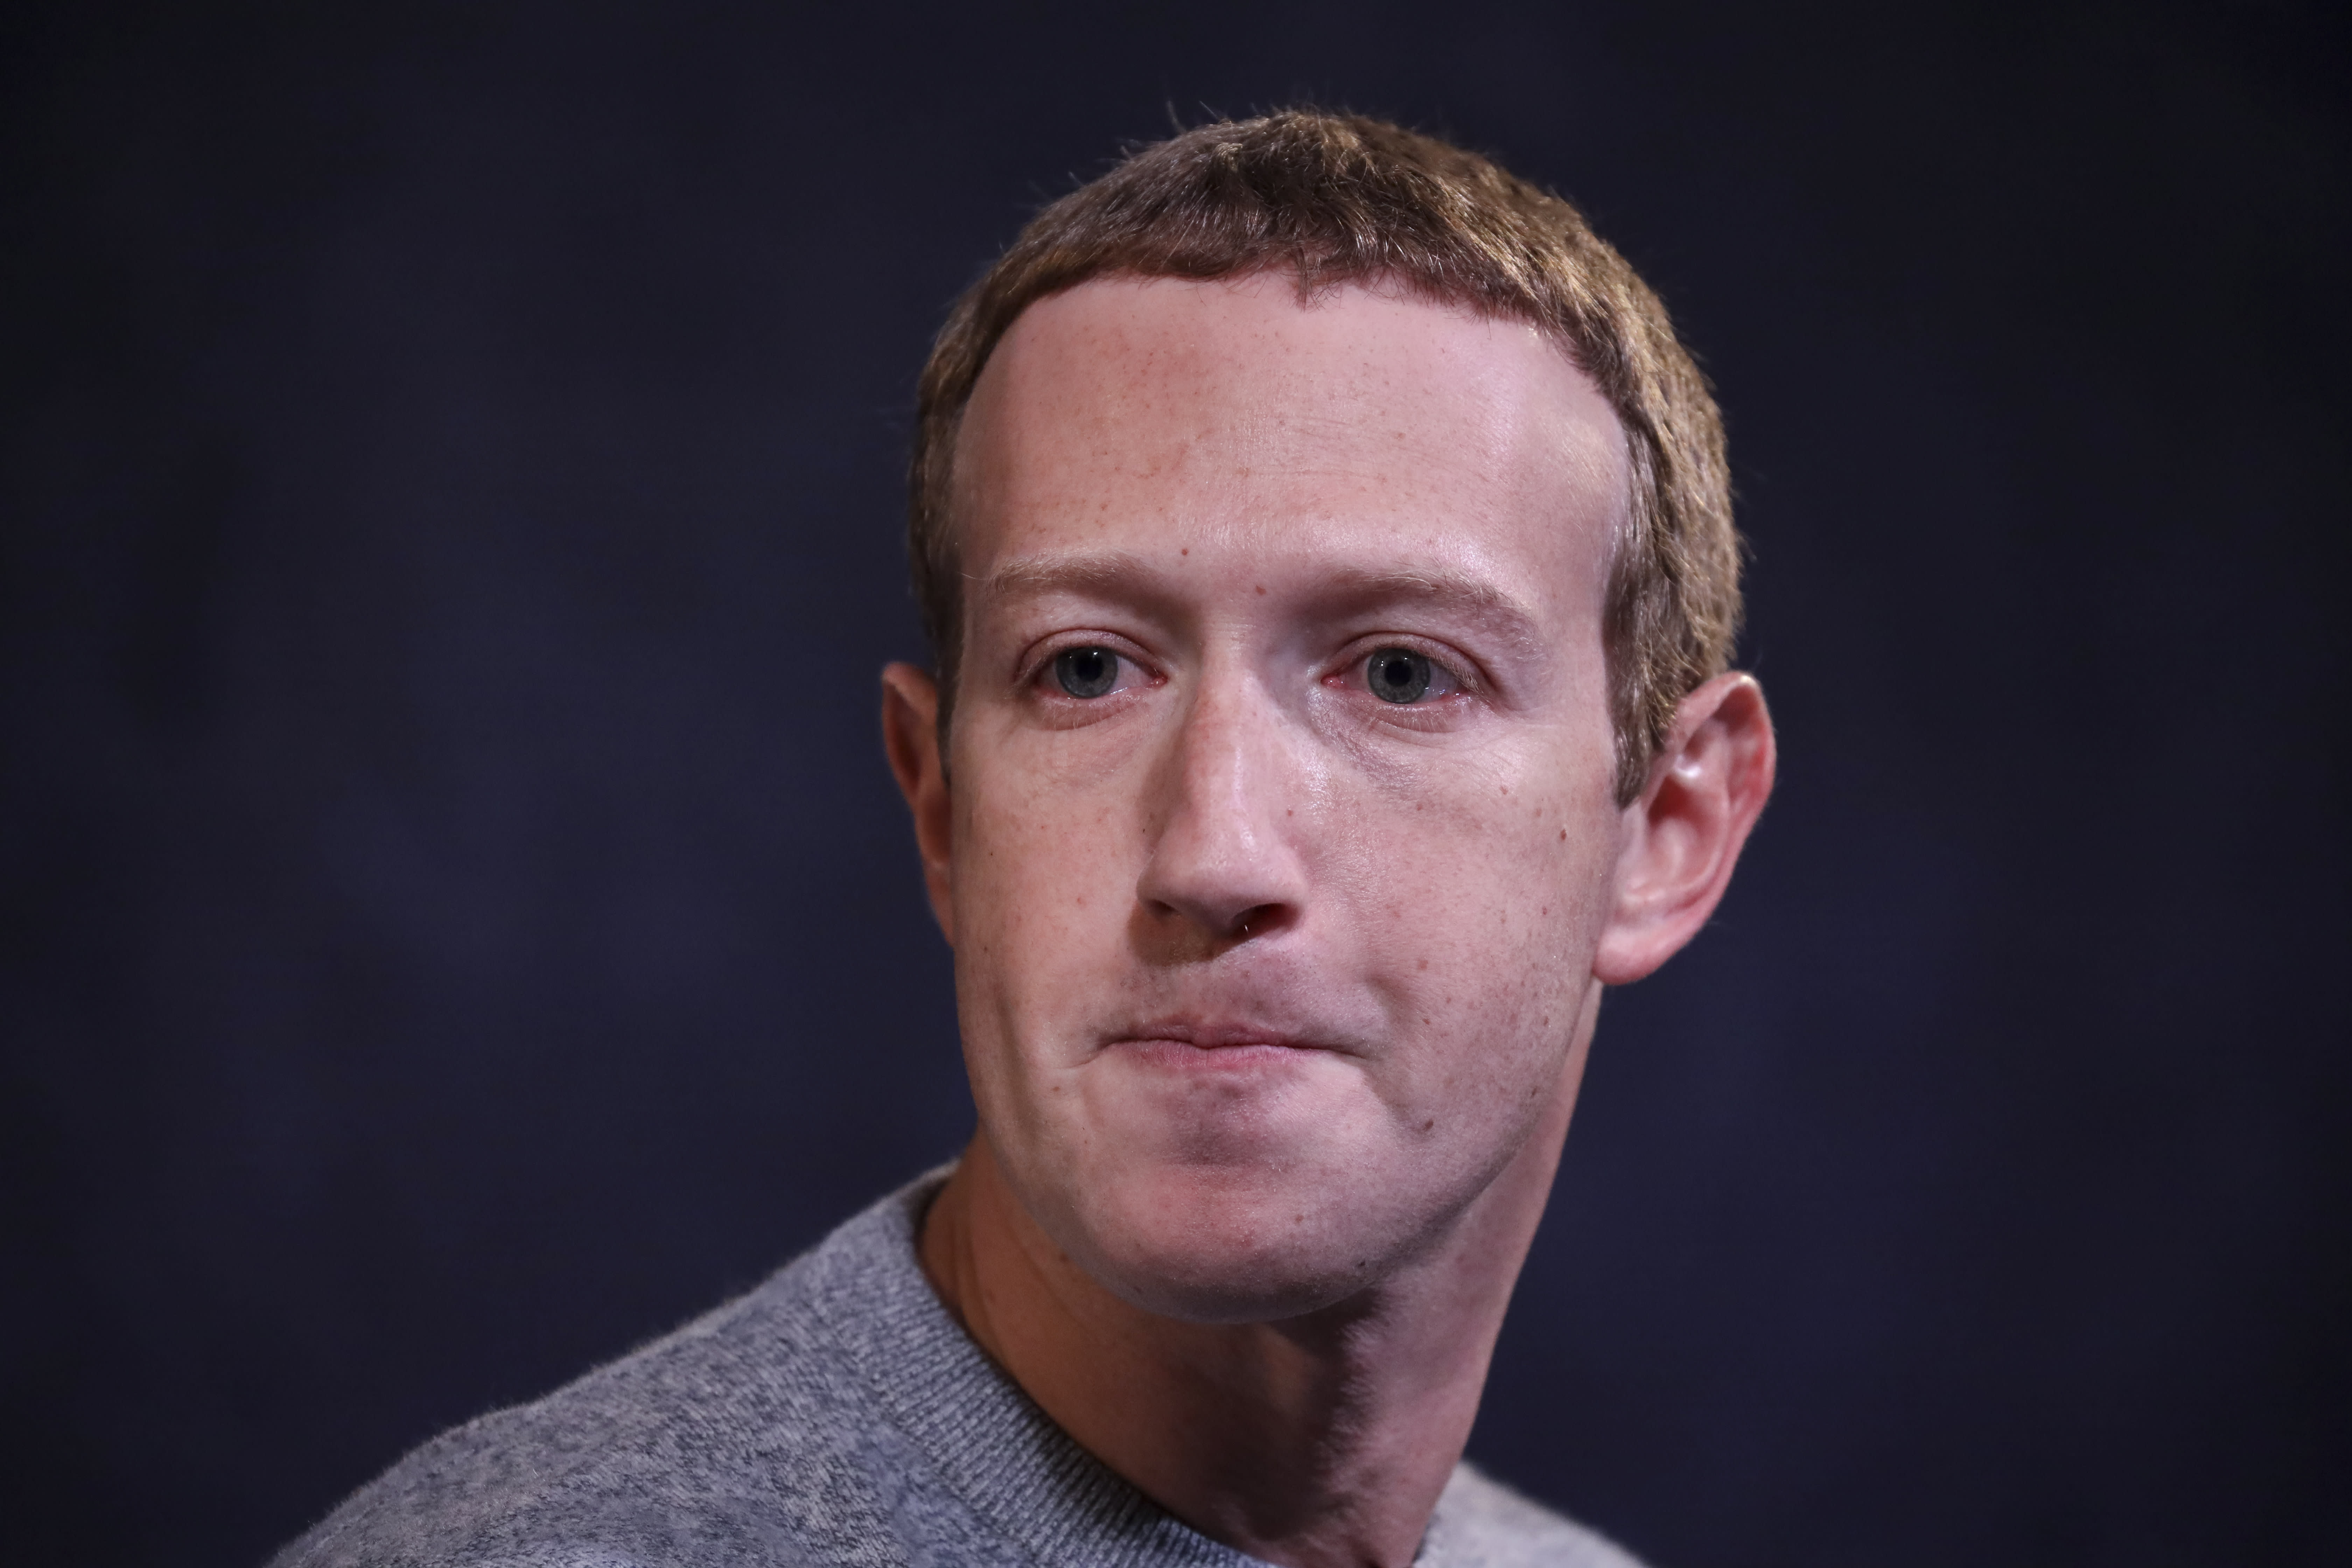 Harvard expert on Mark Zuckerberg, email layoffs at Meta: 'Horrific'